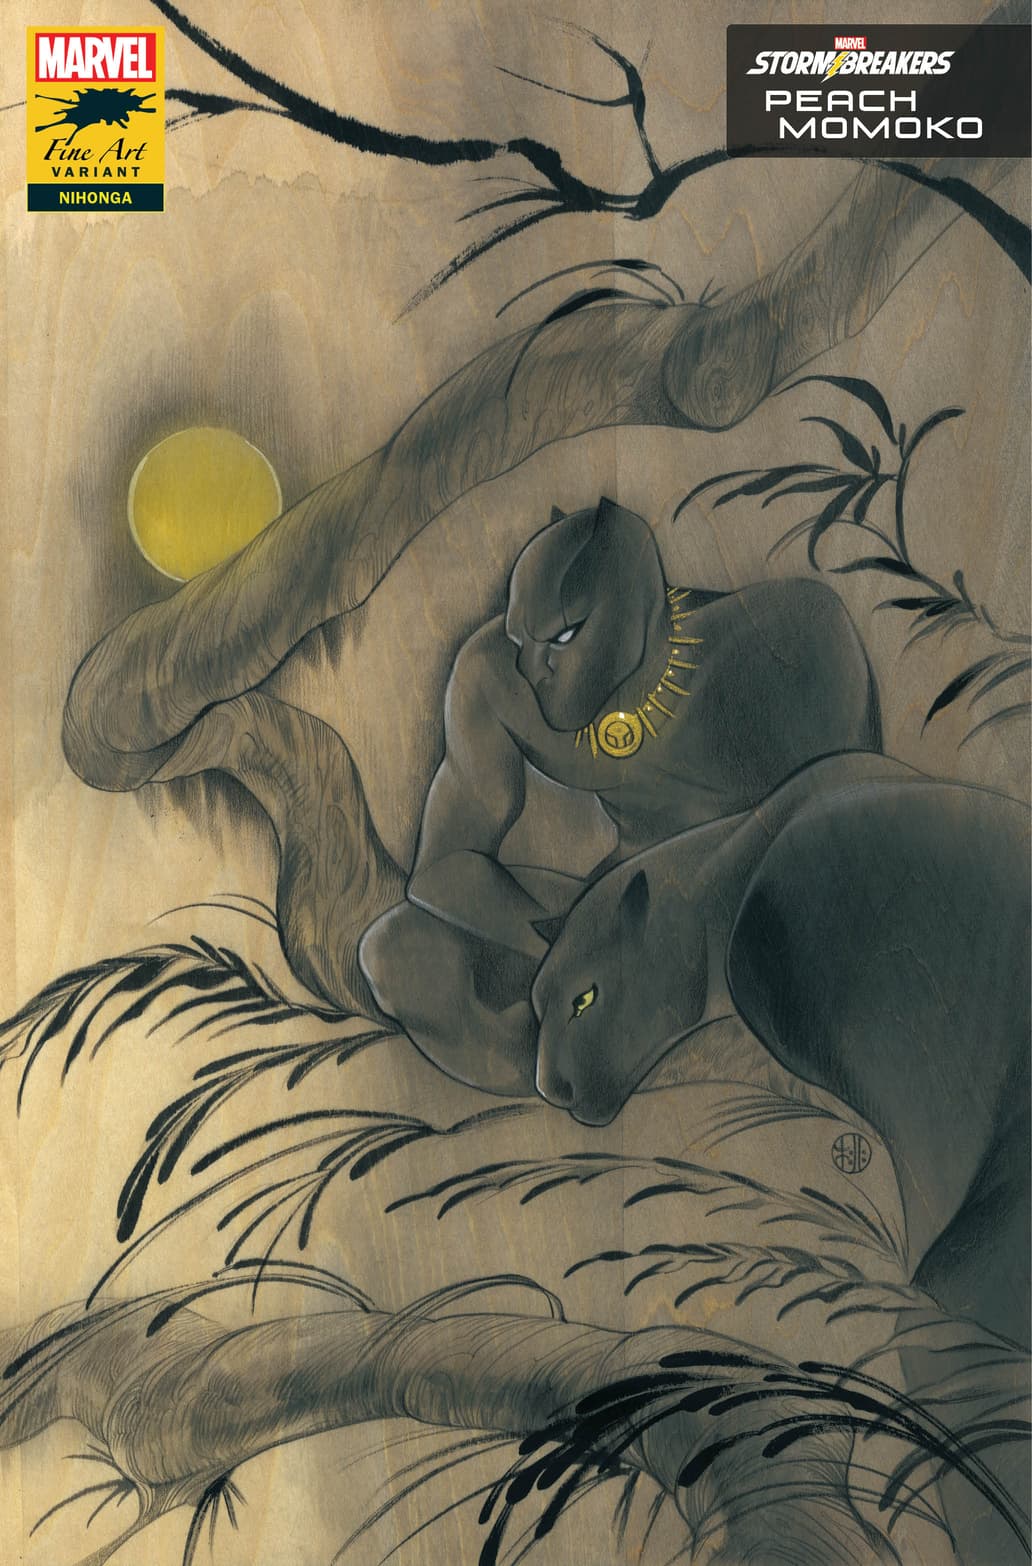 BLACK PANTHER #25 Fine Art Variant by Peach Momoko